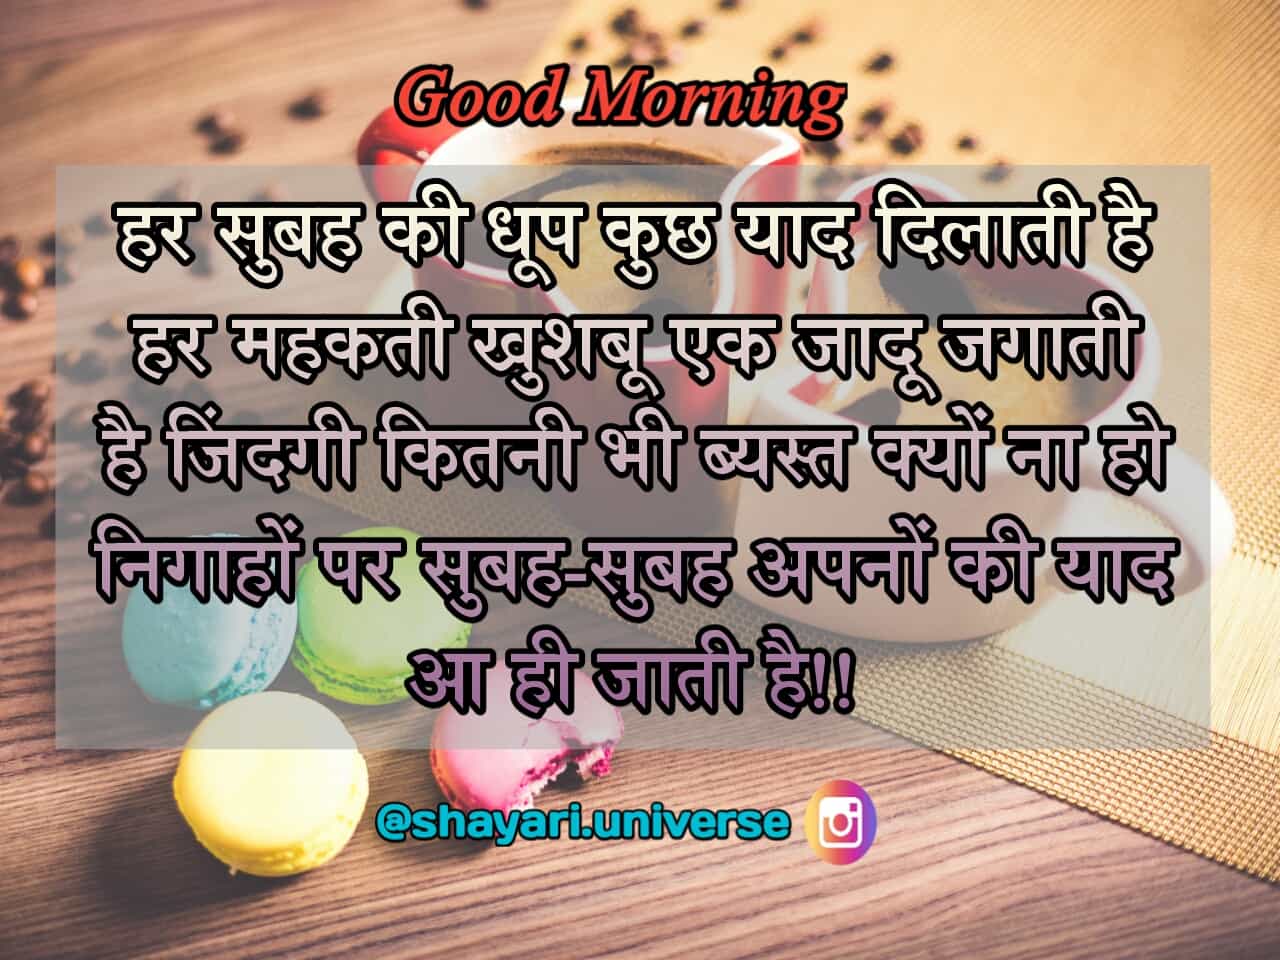 good morning thoughts in hindi, good morning message in hindi